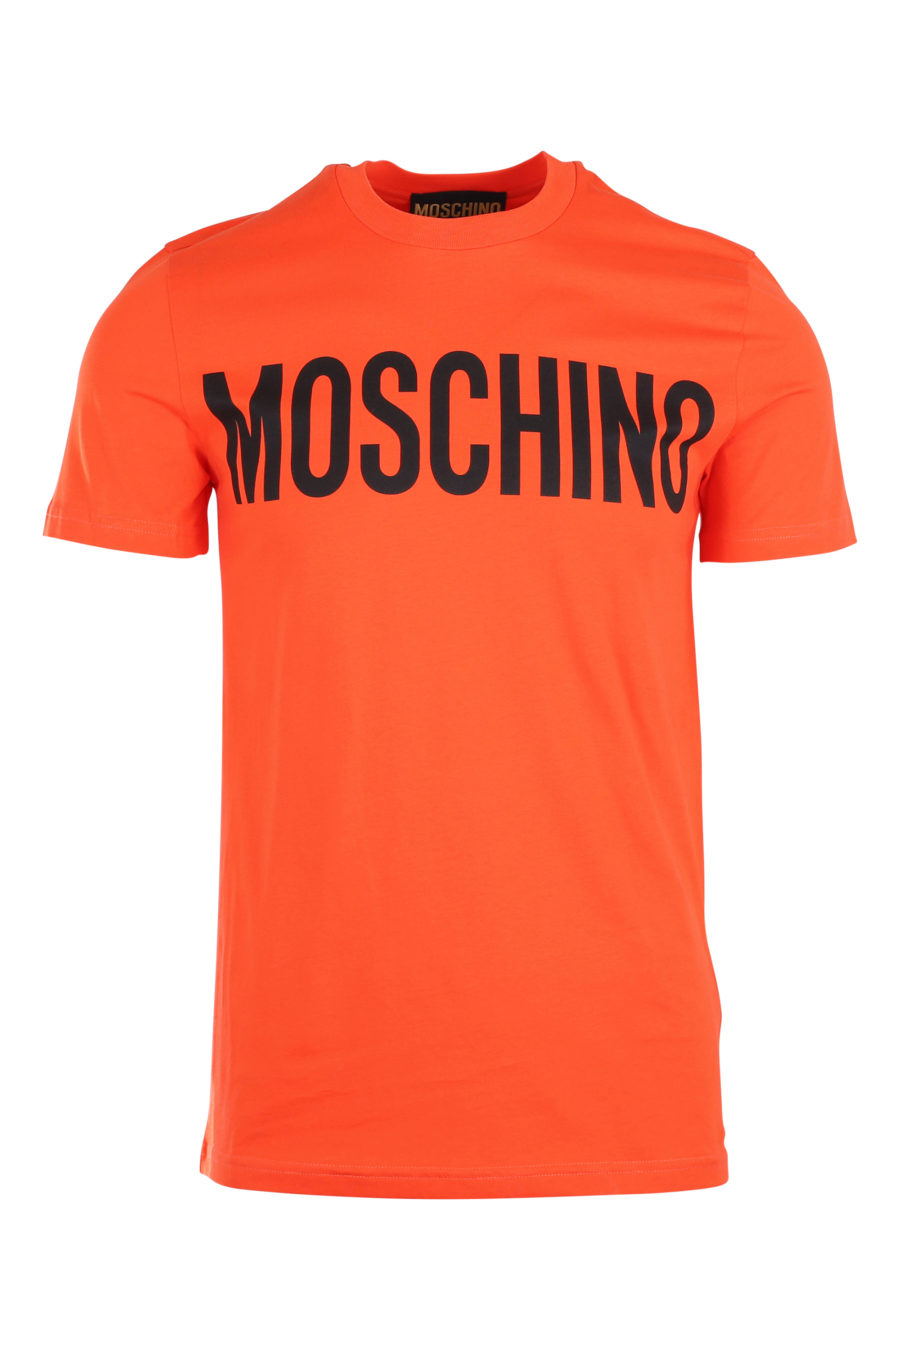 Camiseta anaranjada con logotipo grande "fantasy" - IMG 9937